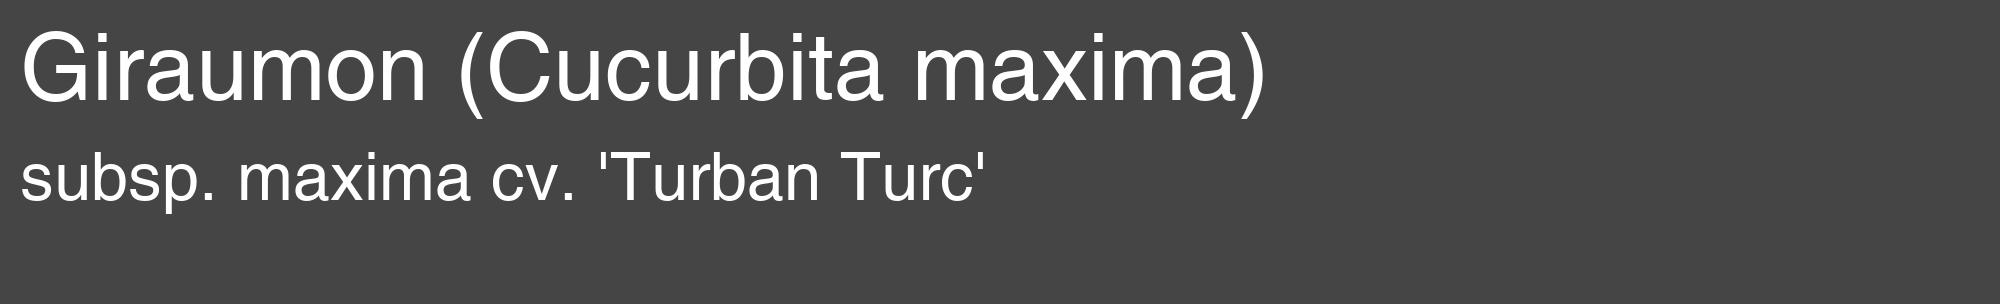 Étiquette de : Cucurbita maxima subsp. maxima cv. 'Turban Turc' - format c - style blanche58_basique_basiquehel avec comestibilité